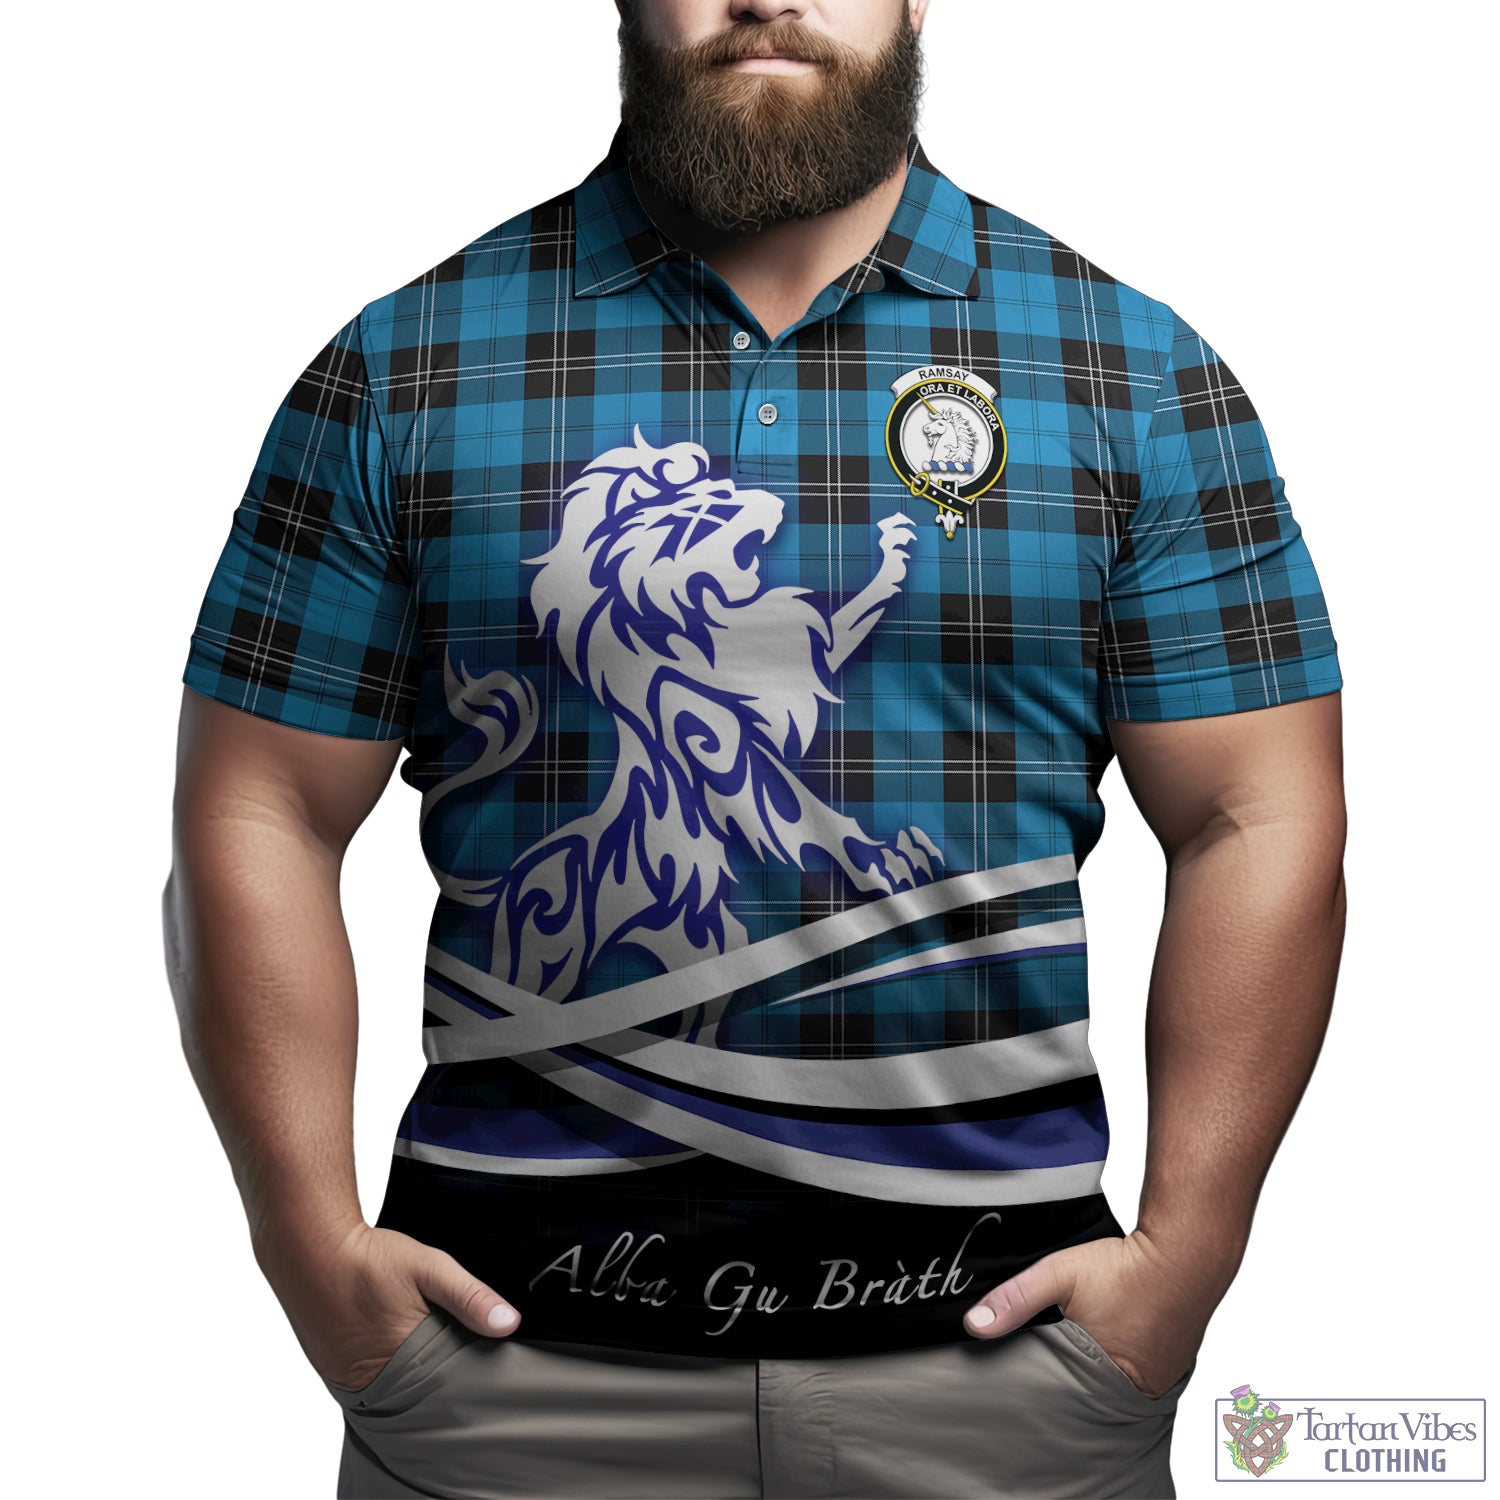 ramsay-blue-ancient-tartan-polo-shirt-with-alba-gu-brath-regal-lion-emblem